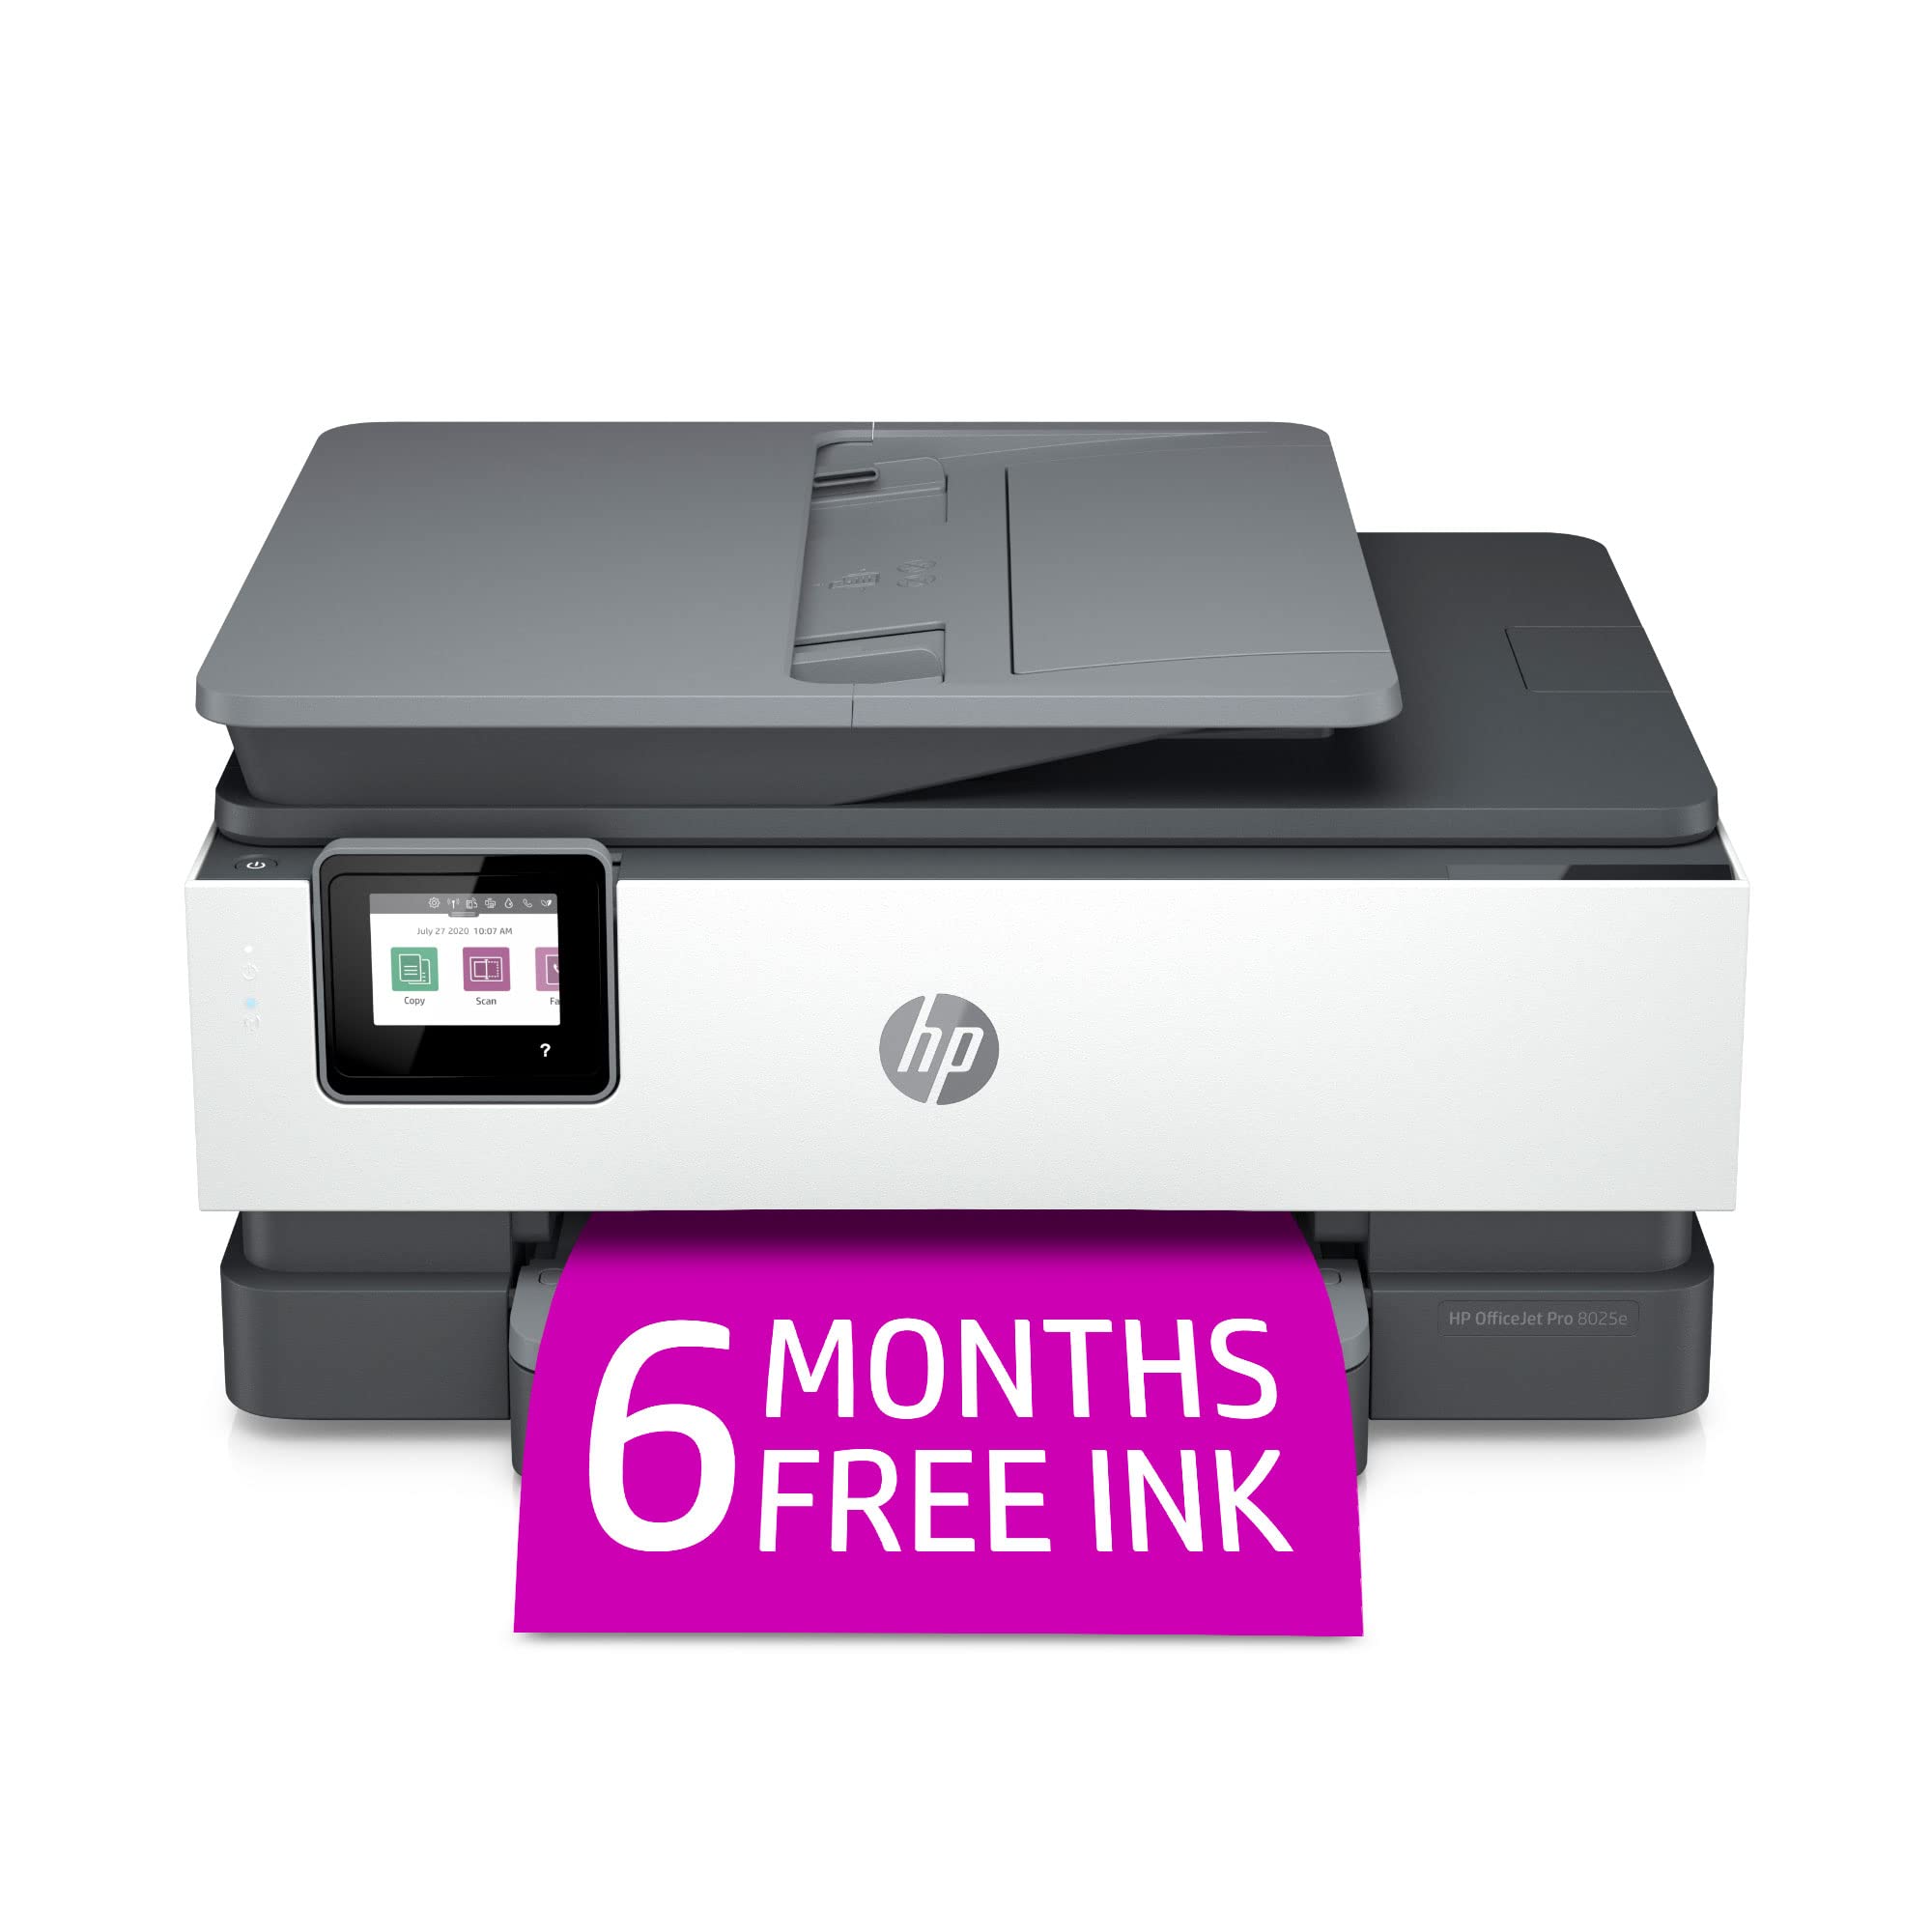 HP Bezprzewodowa drukarka wielofunkcyjna OfficeJet Pro 6978